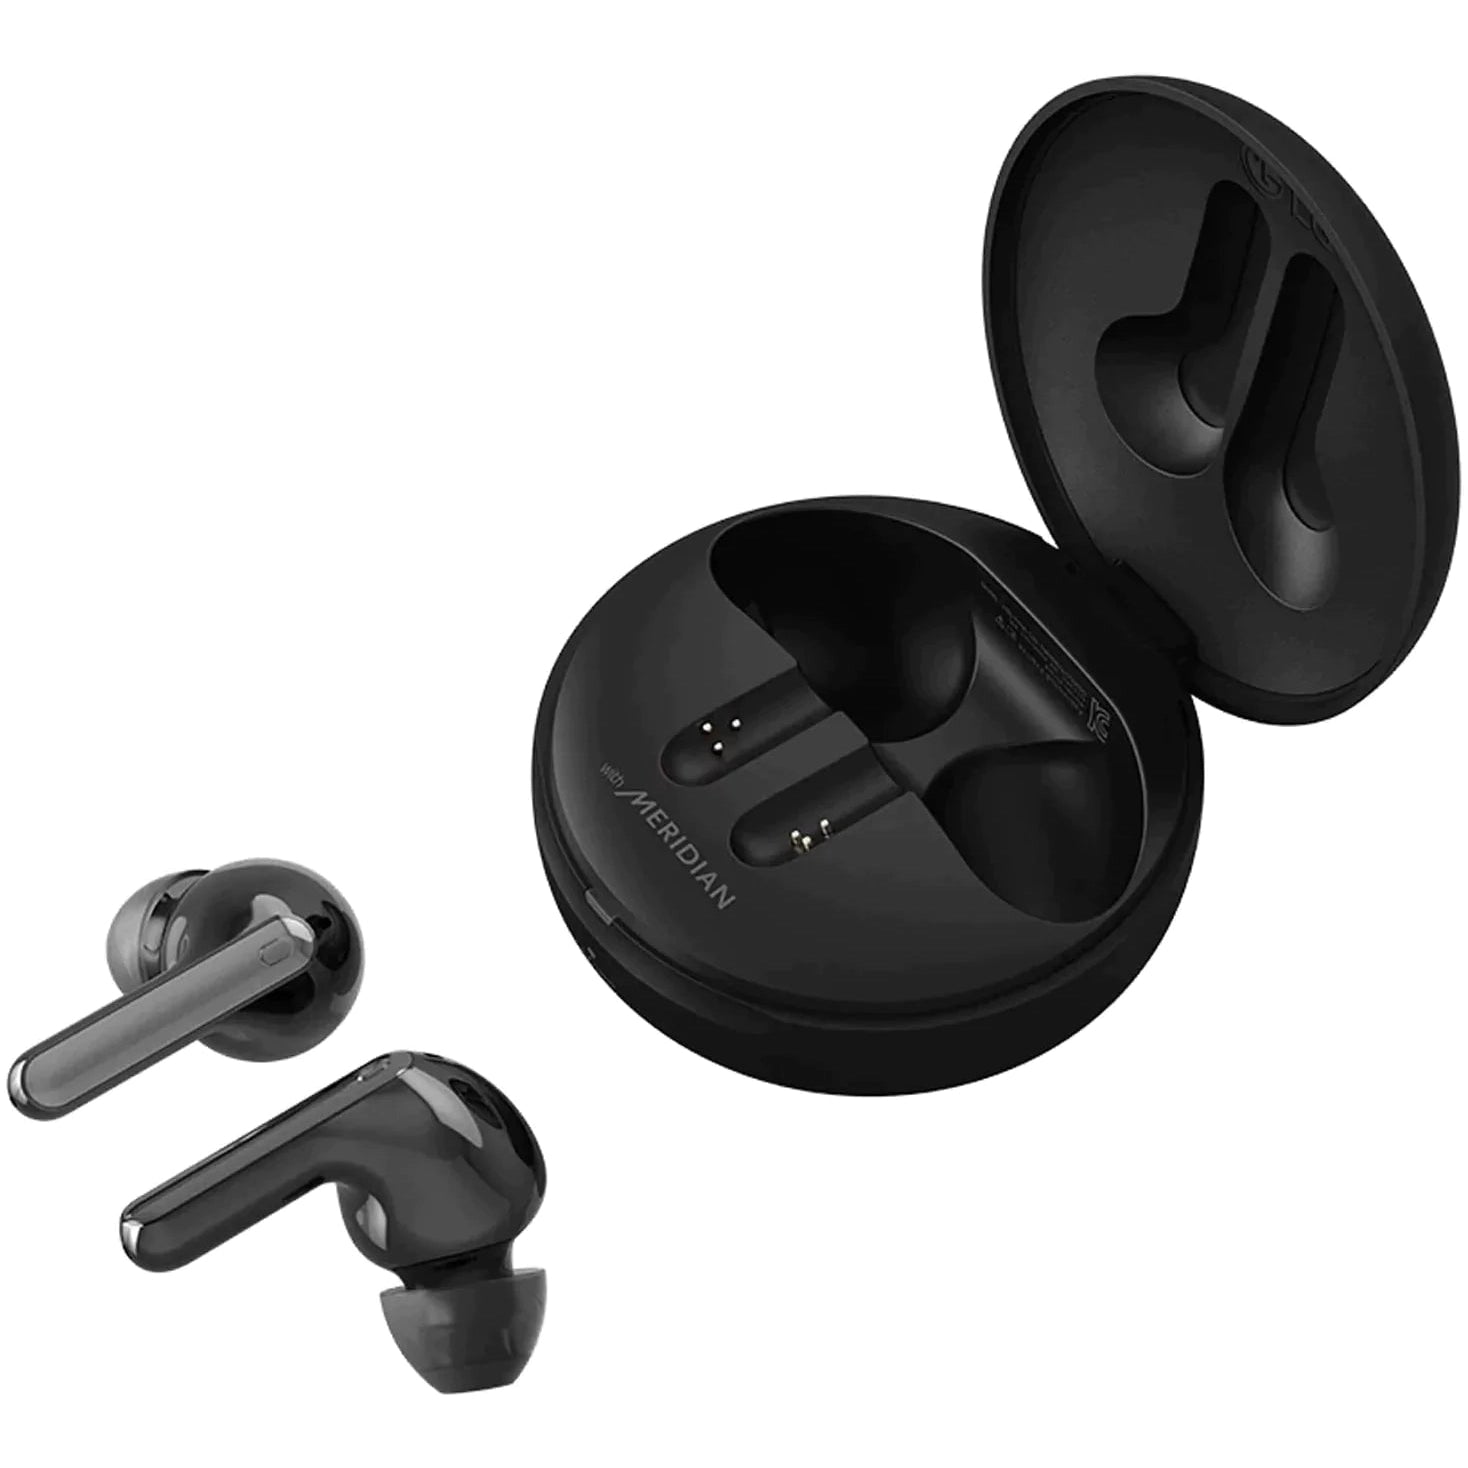 LG TONE Free HBS-FN7 True Wireless Earbuds - Refurbished Good